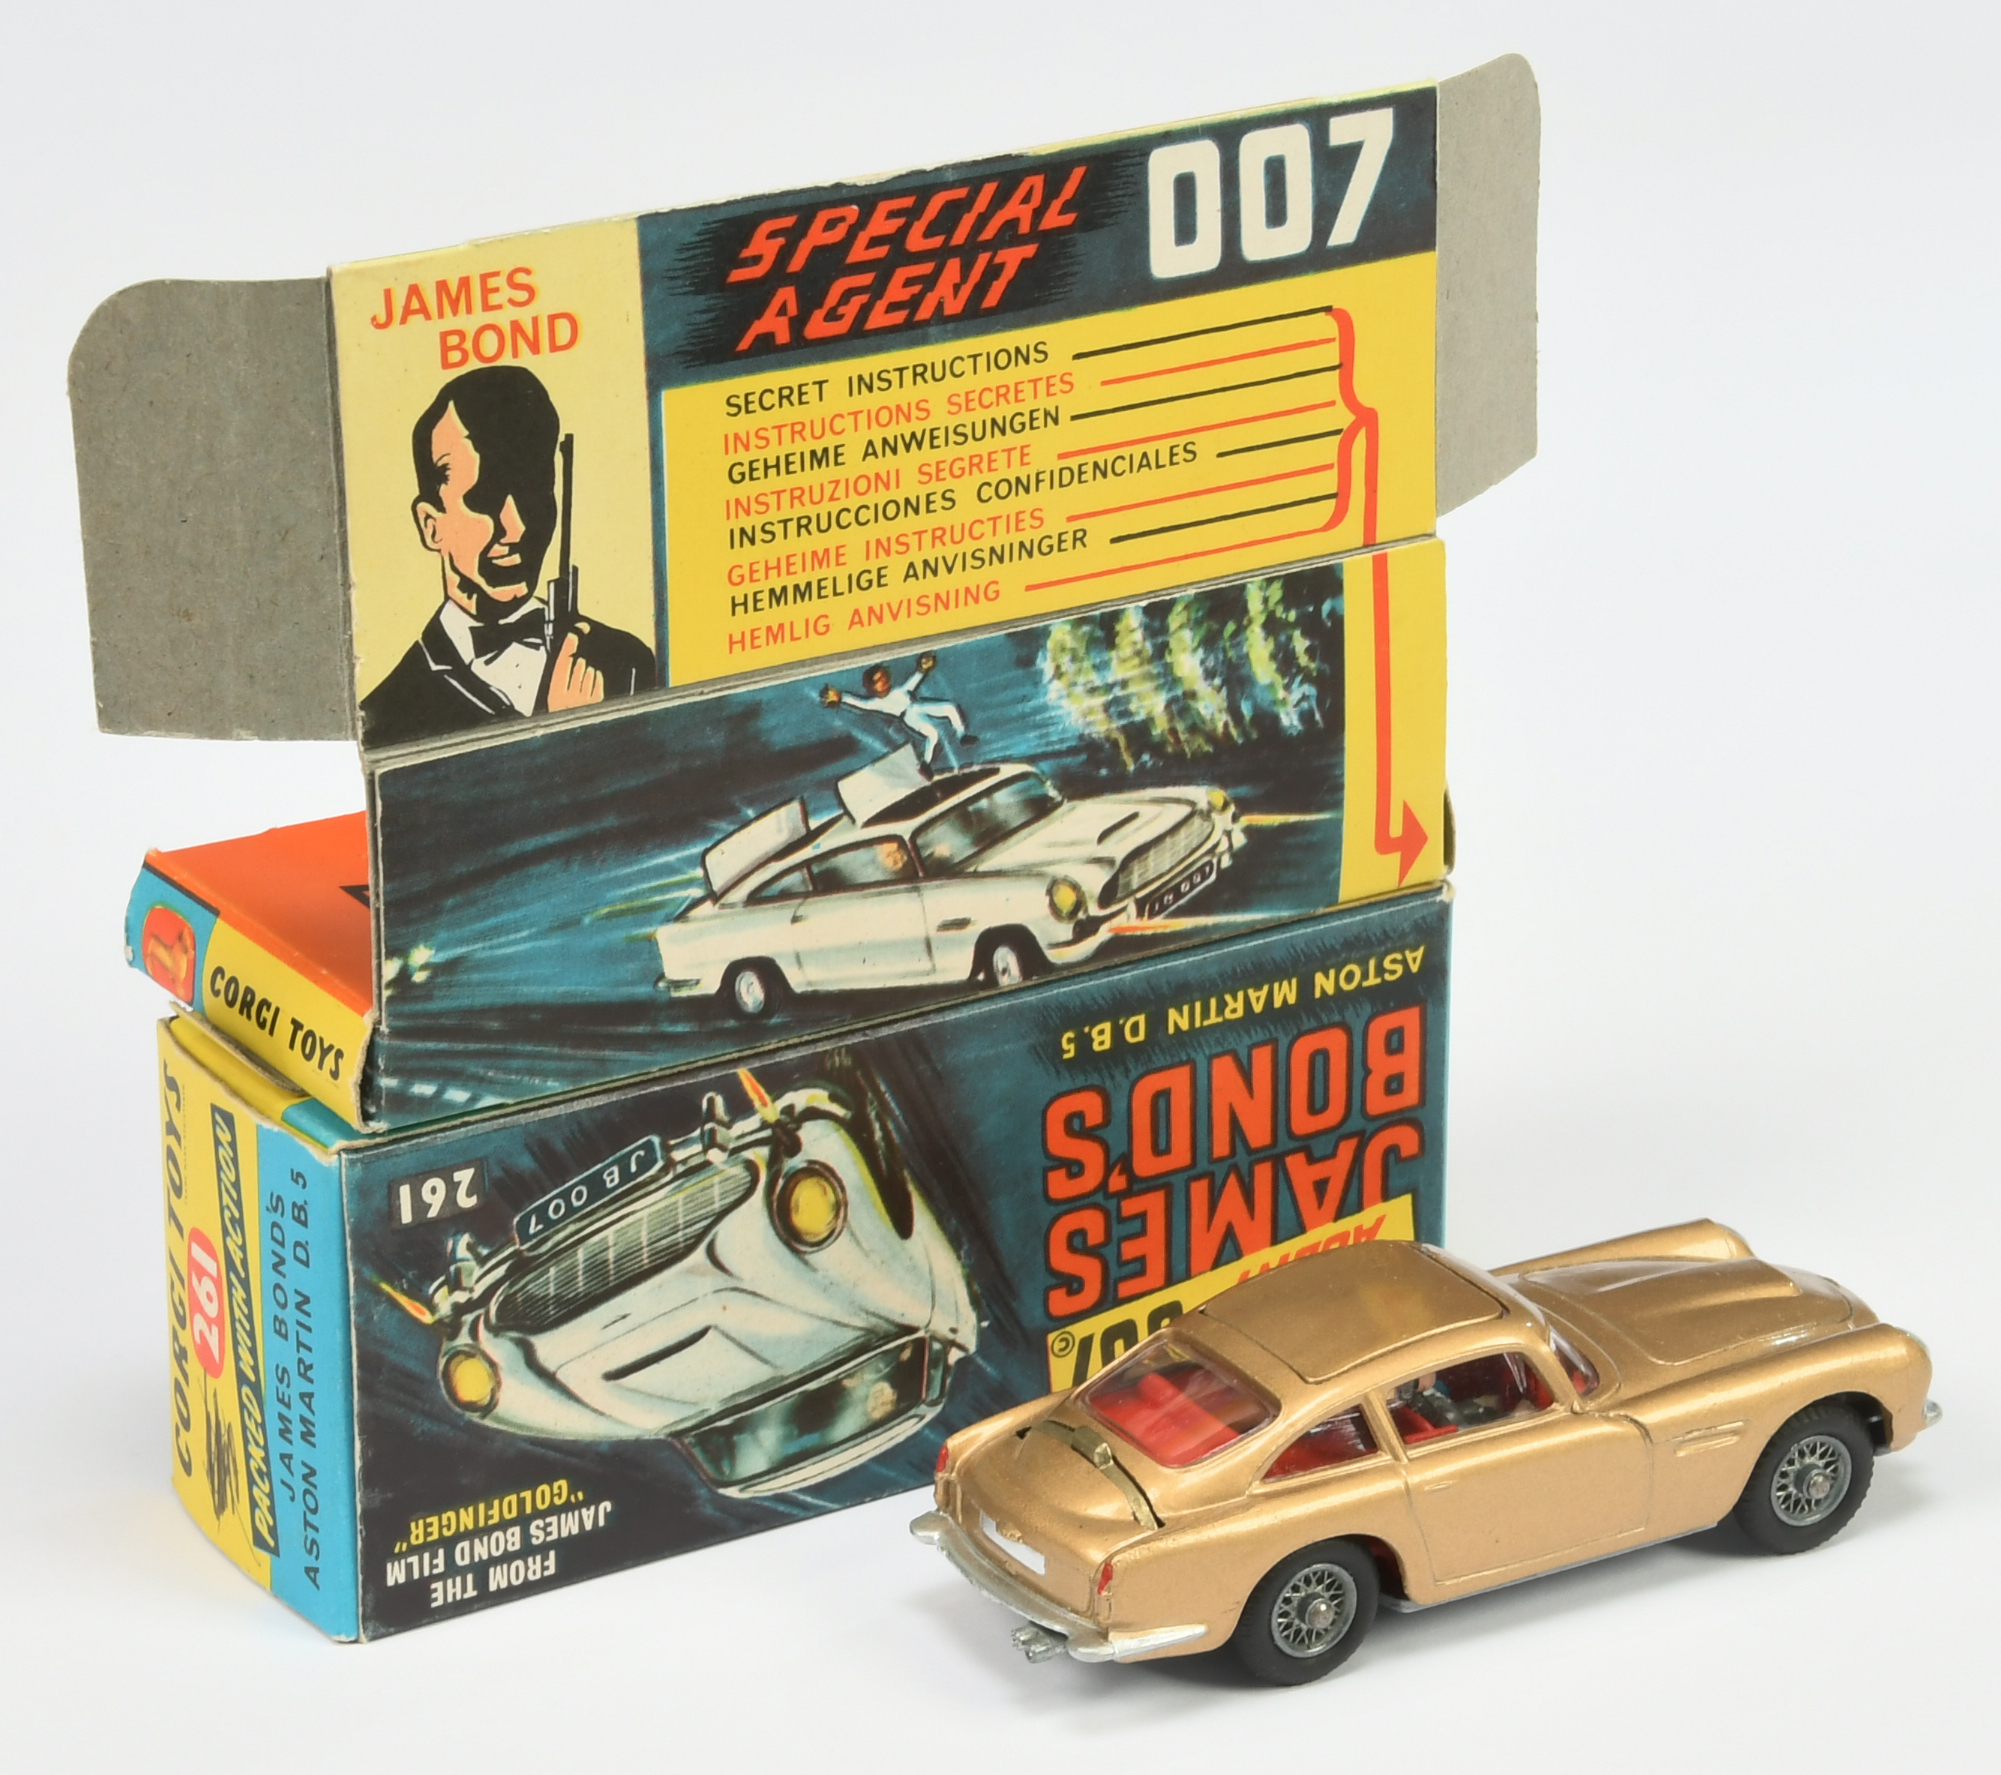 Corgi Toys 261 "James Bond" Aston Martin DB5 "Goldfinger" - Gold body, red interior with "James B... - Image 2 of 2